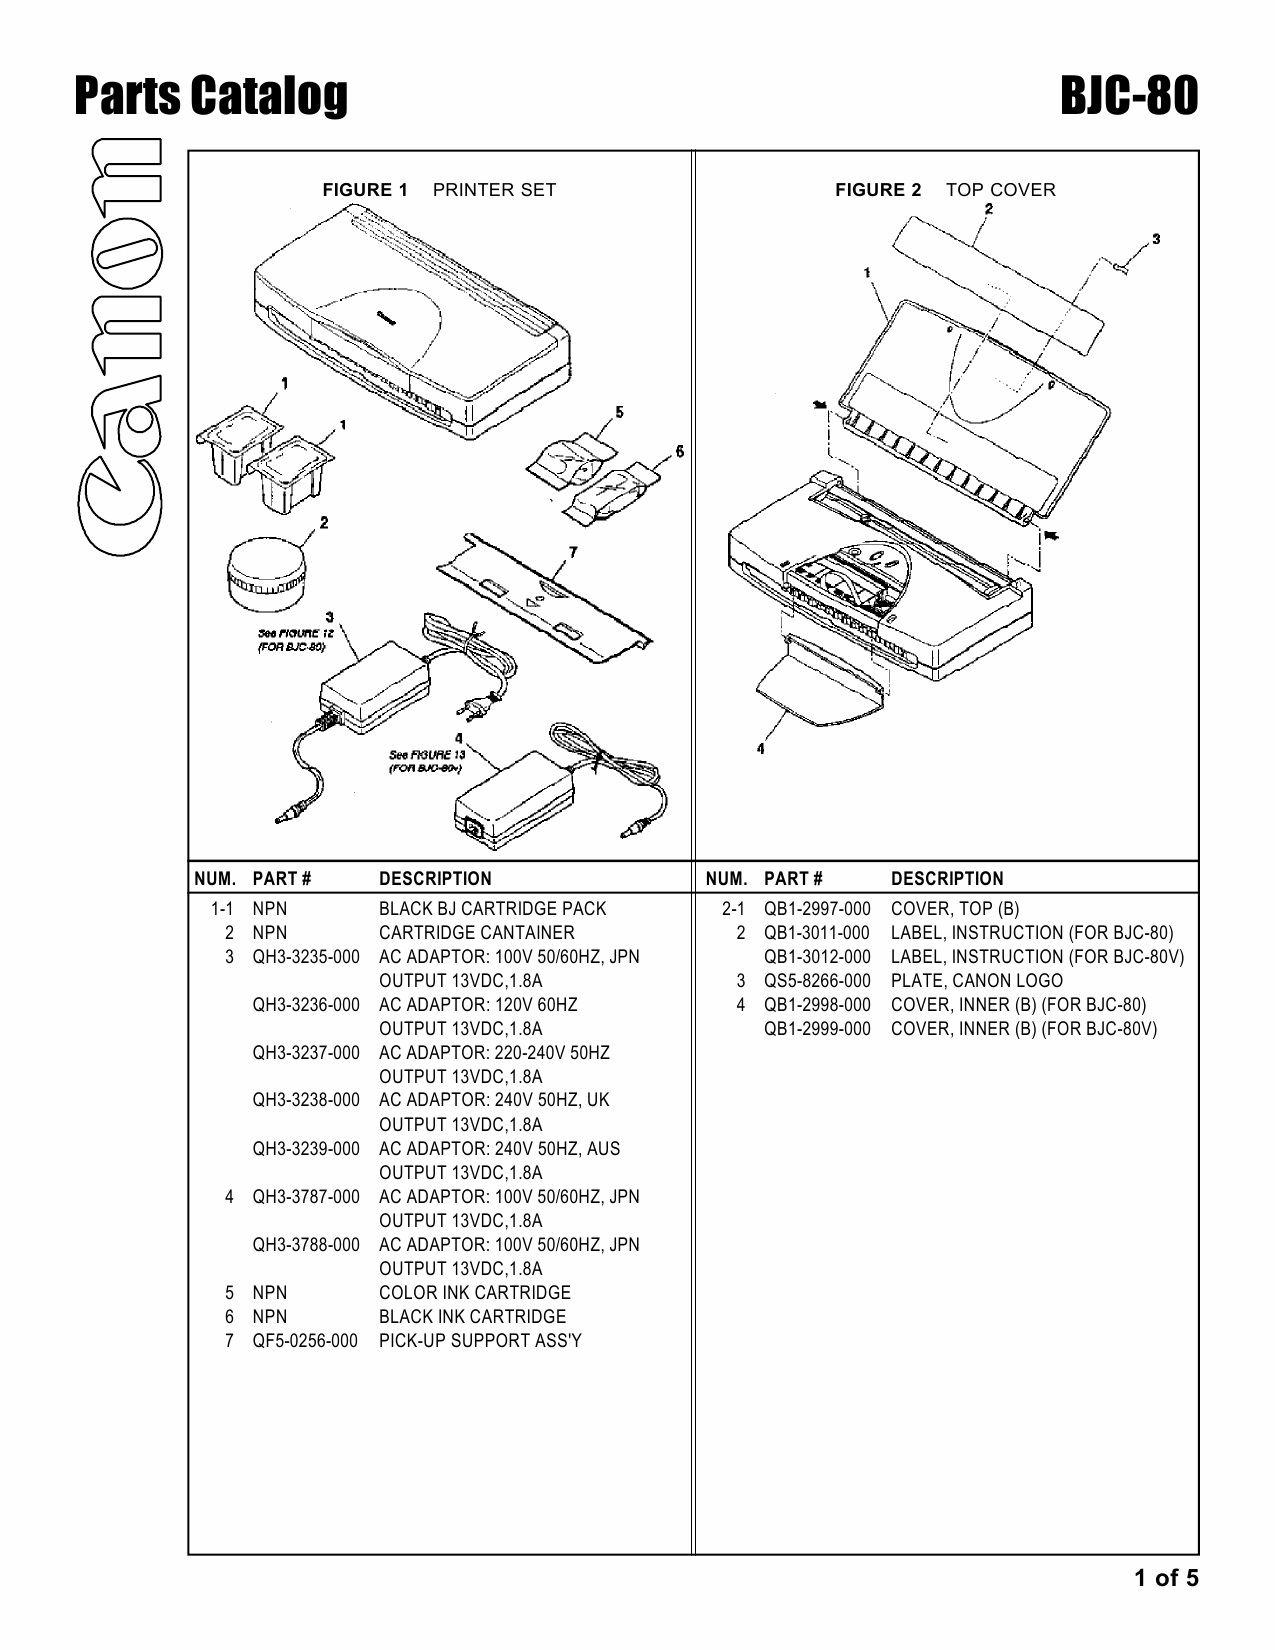 Canon BubbleJet BJC-80 Parts Catalog Manual-2